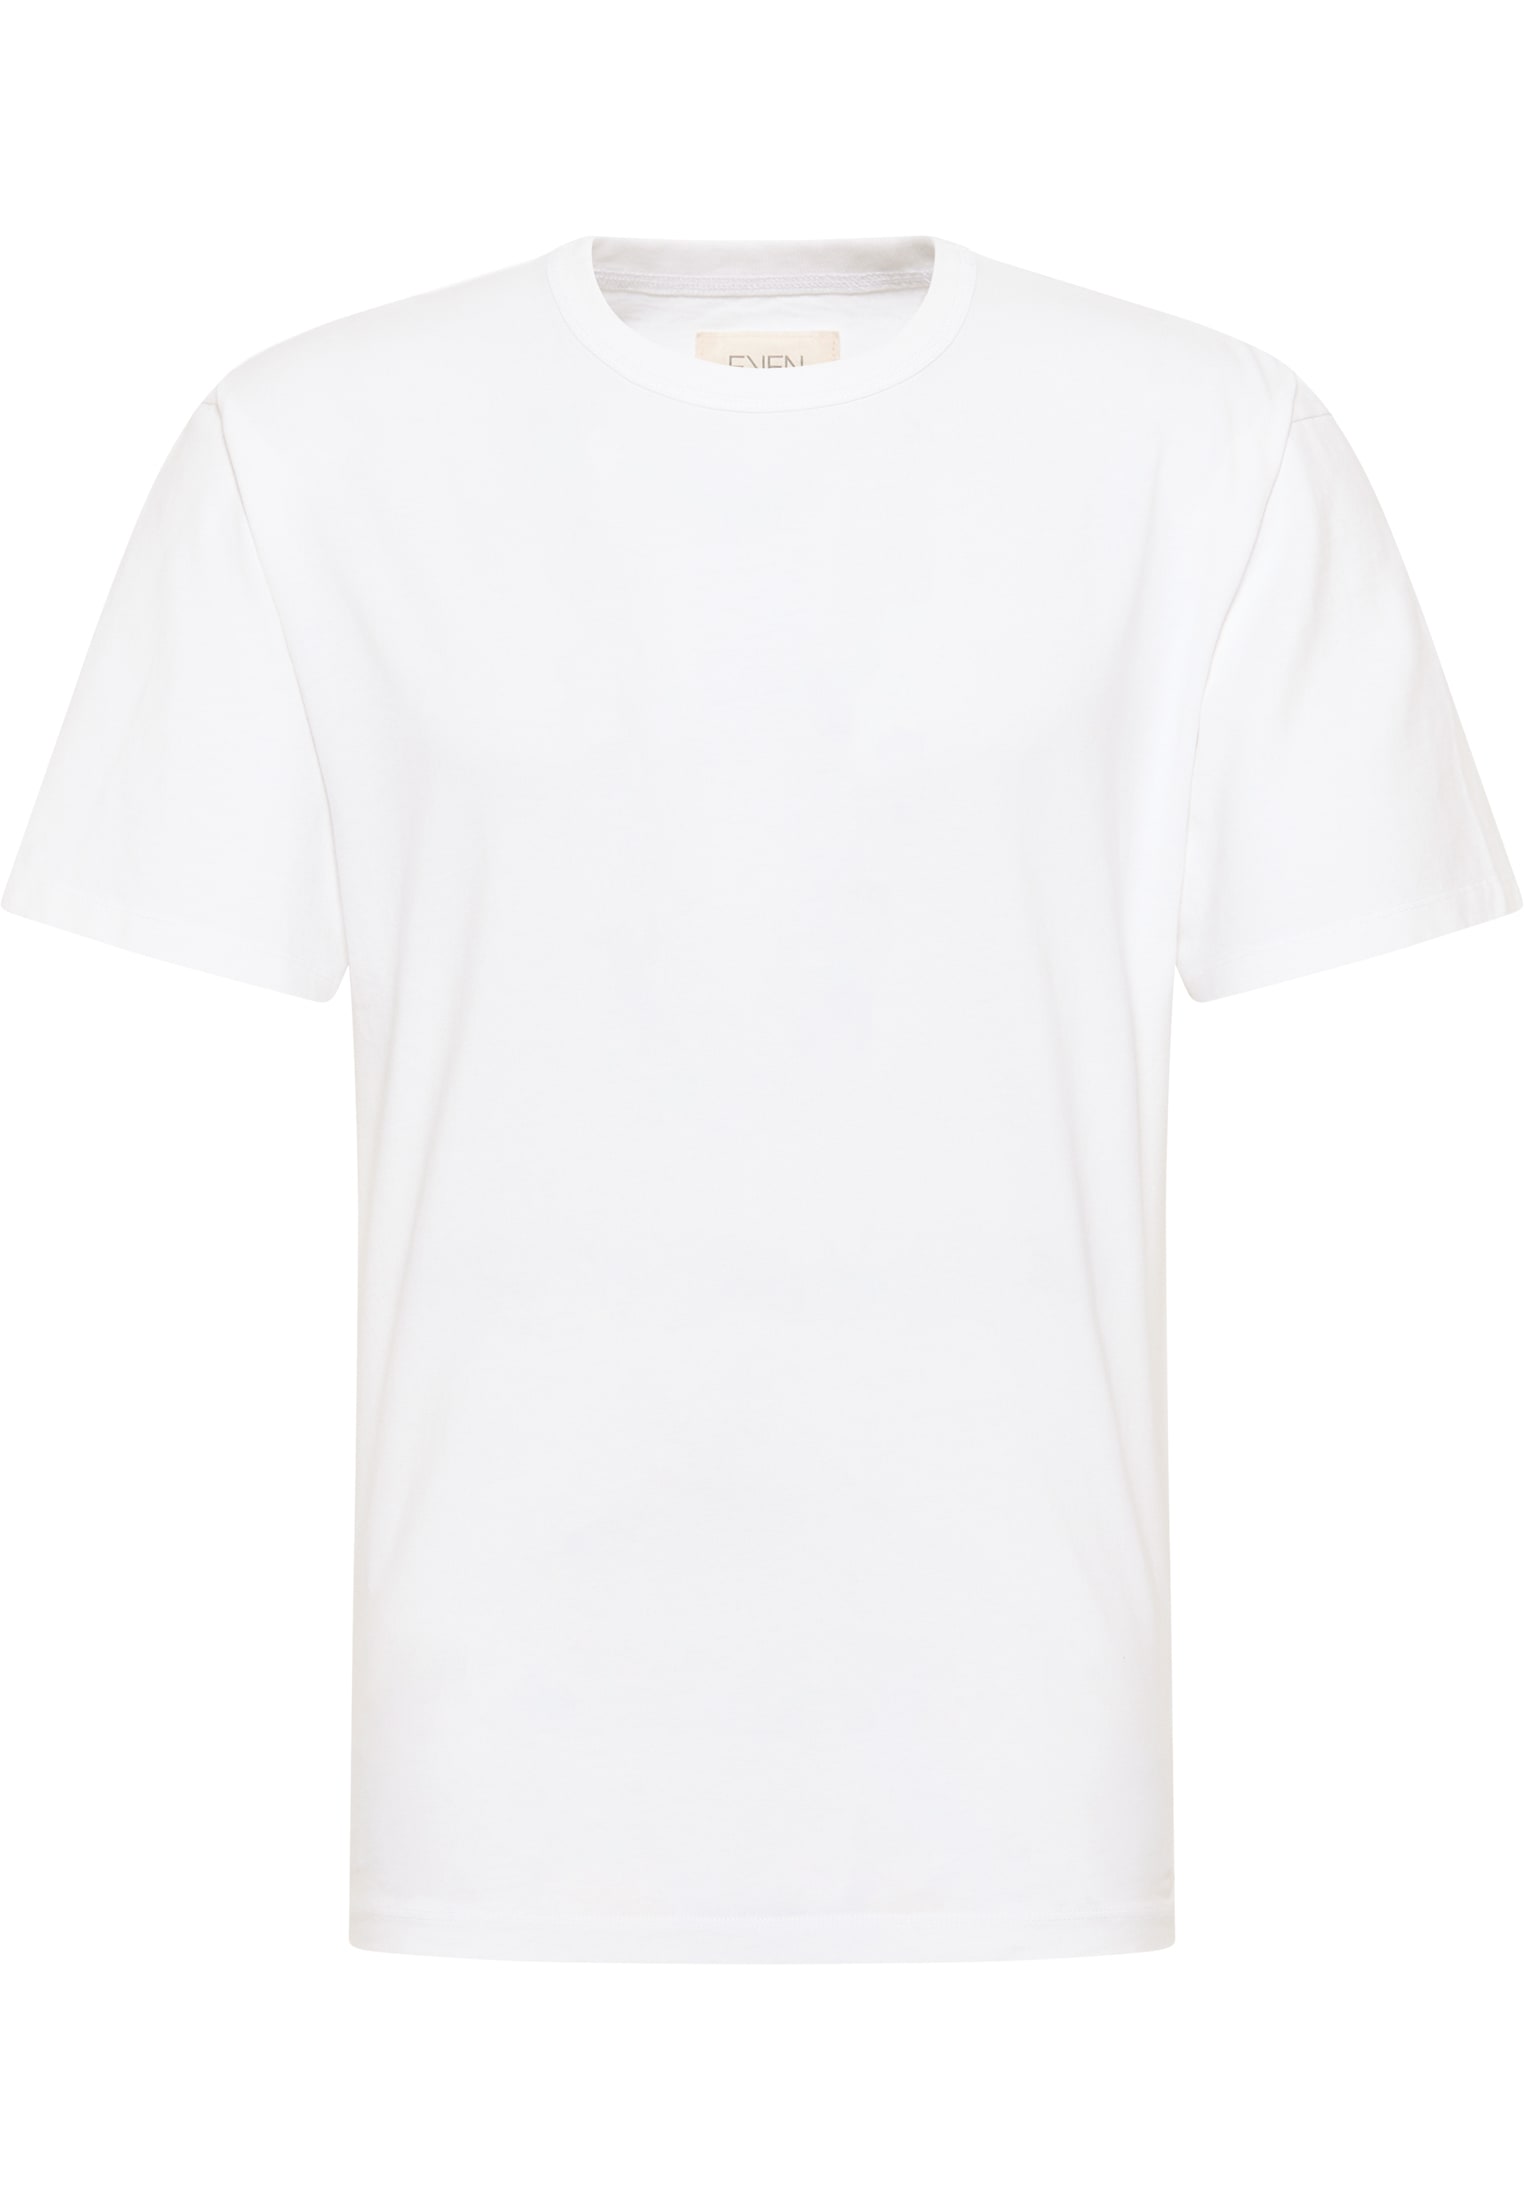 Shirt blanc uni